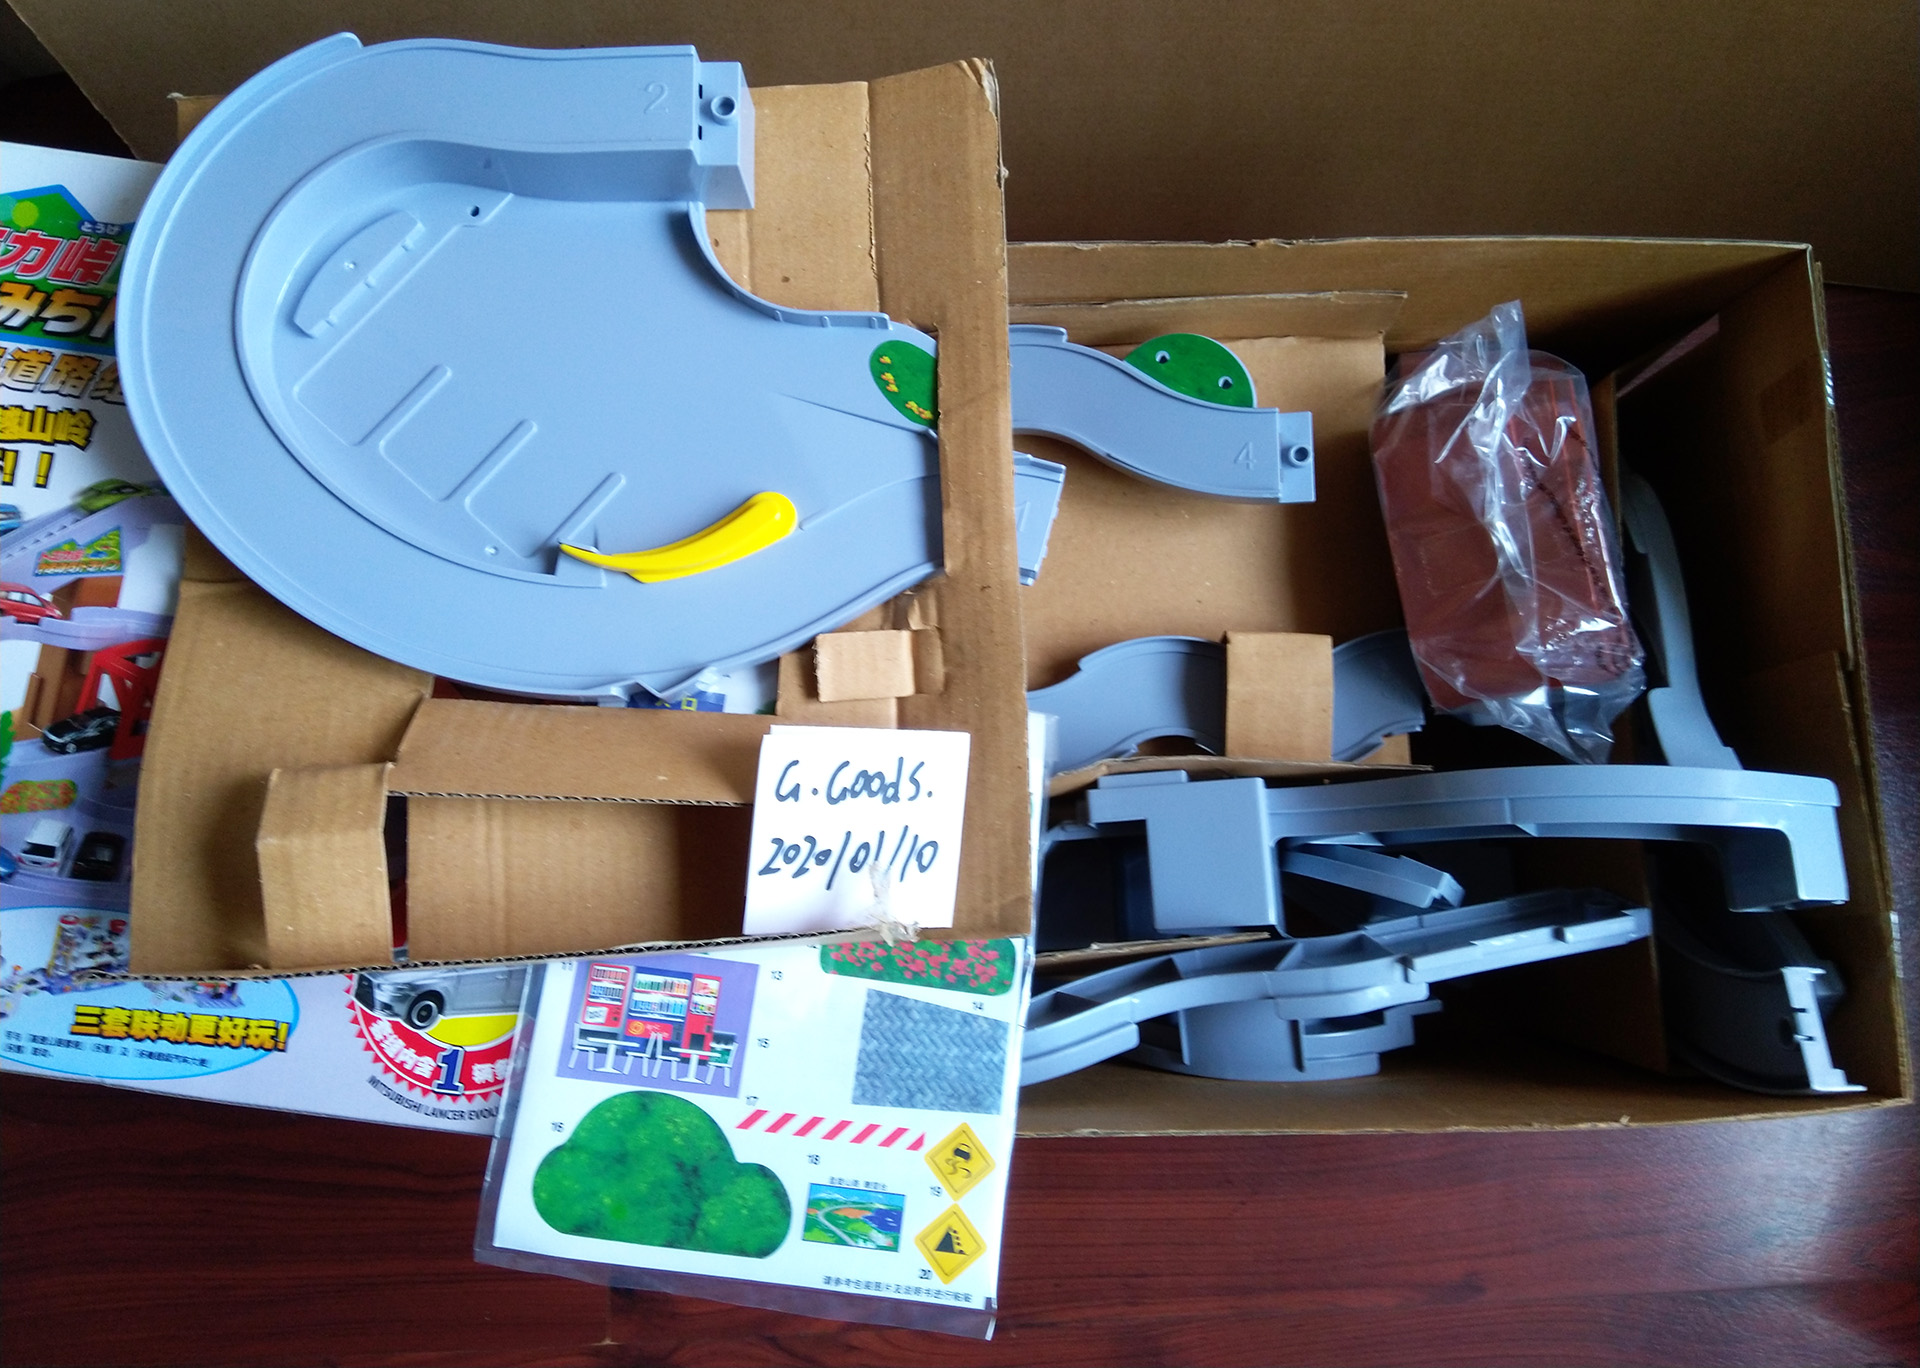 Takara Tomy & Tomica Cars Playset "Mountain Road" Playset Kits for kids. 1